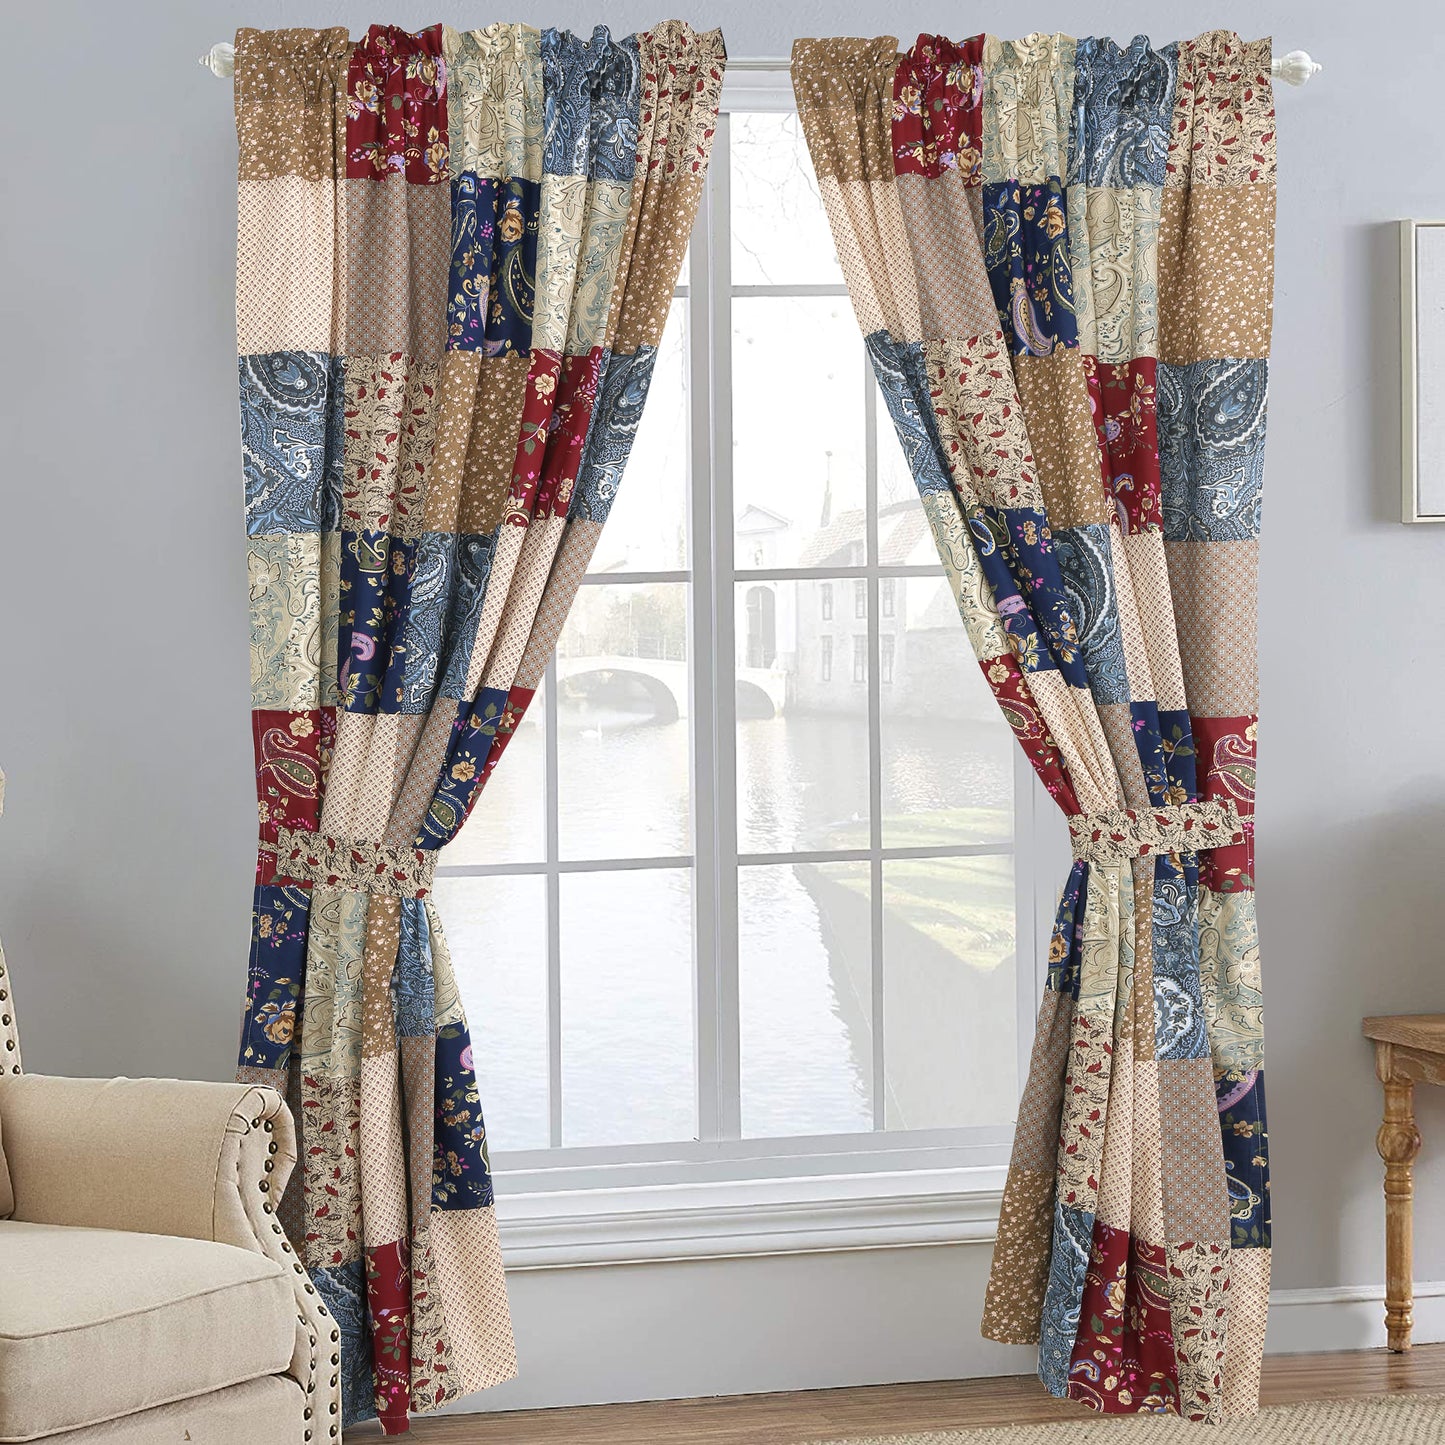 Hyler Sanders Floral Paisley Real Patchwork 3-Piece Cotton Reversible Quilt Bedding Set